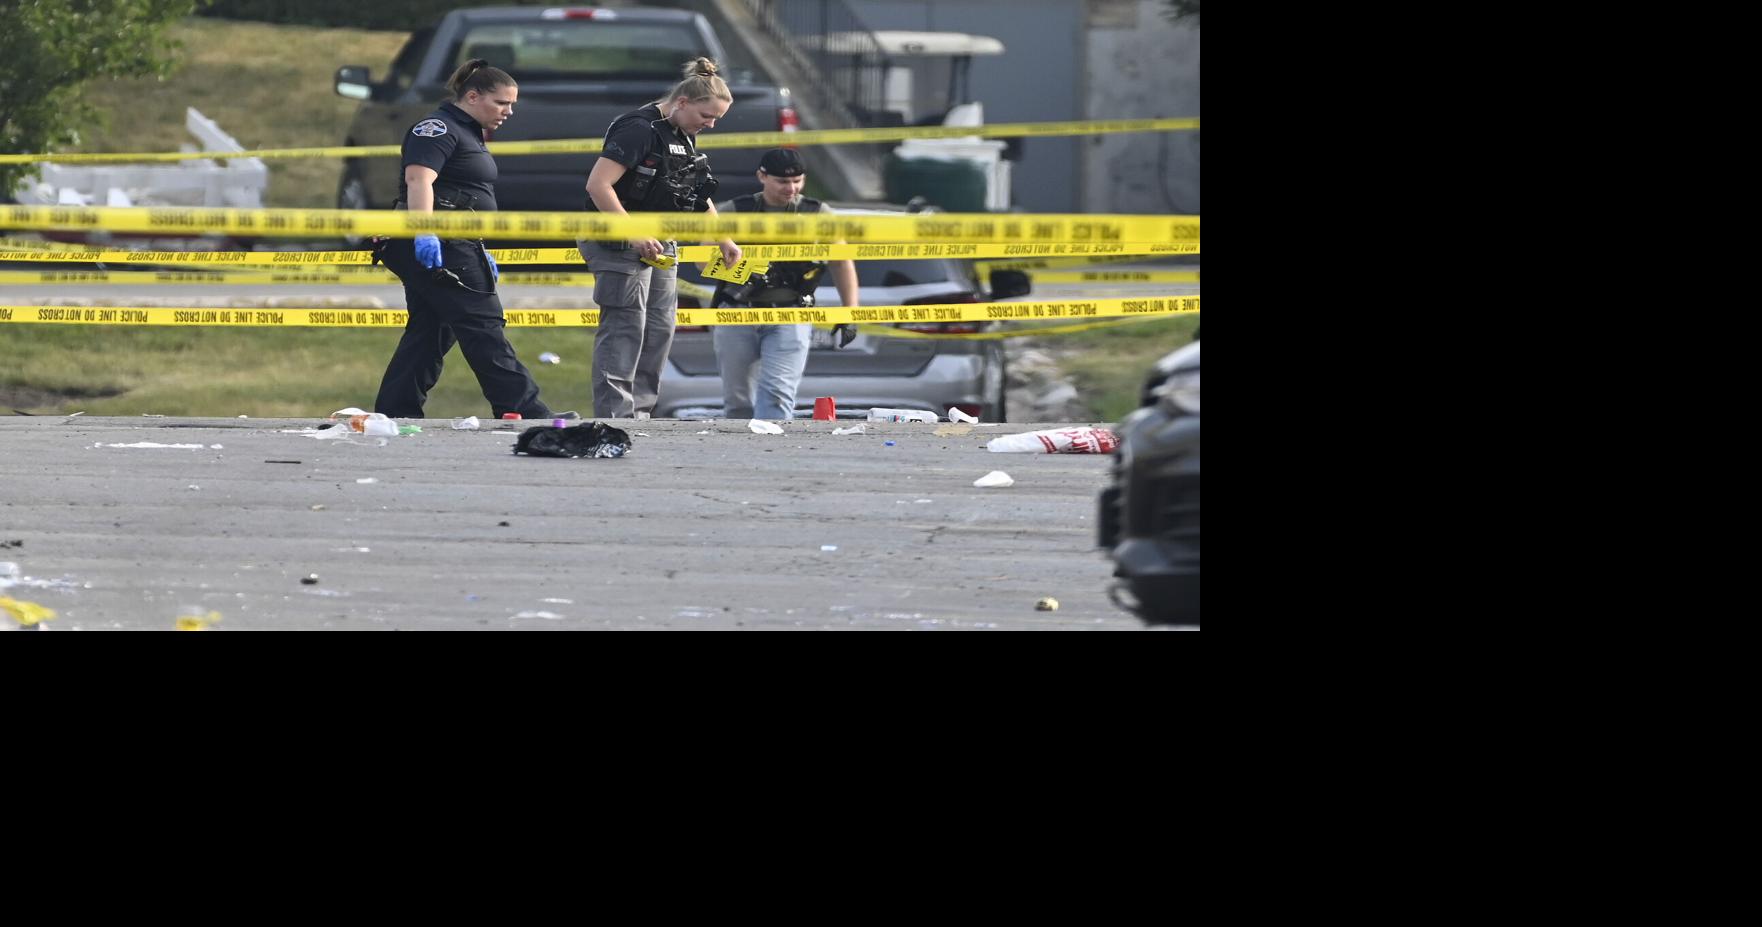 Police: 3 injured fleeing shooting at northern Virginia mall